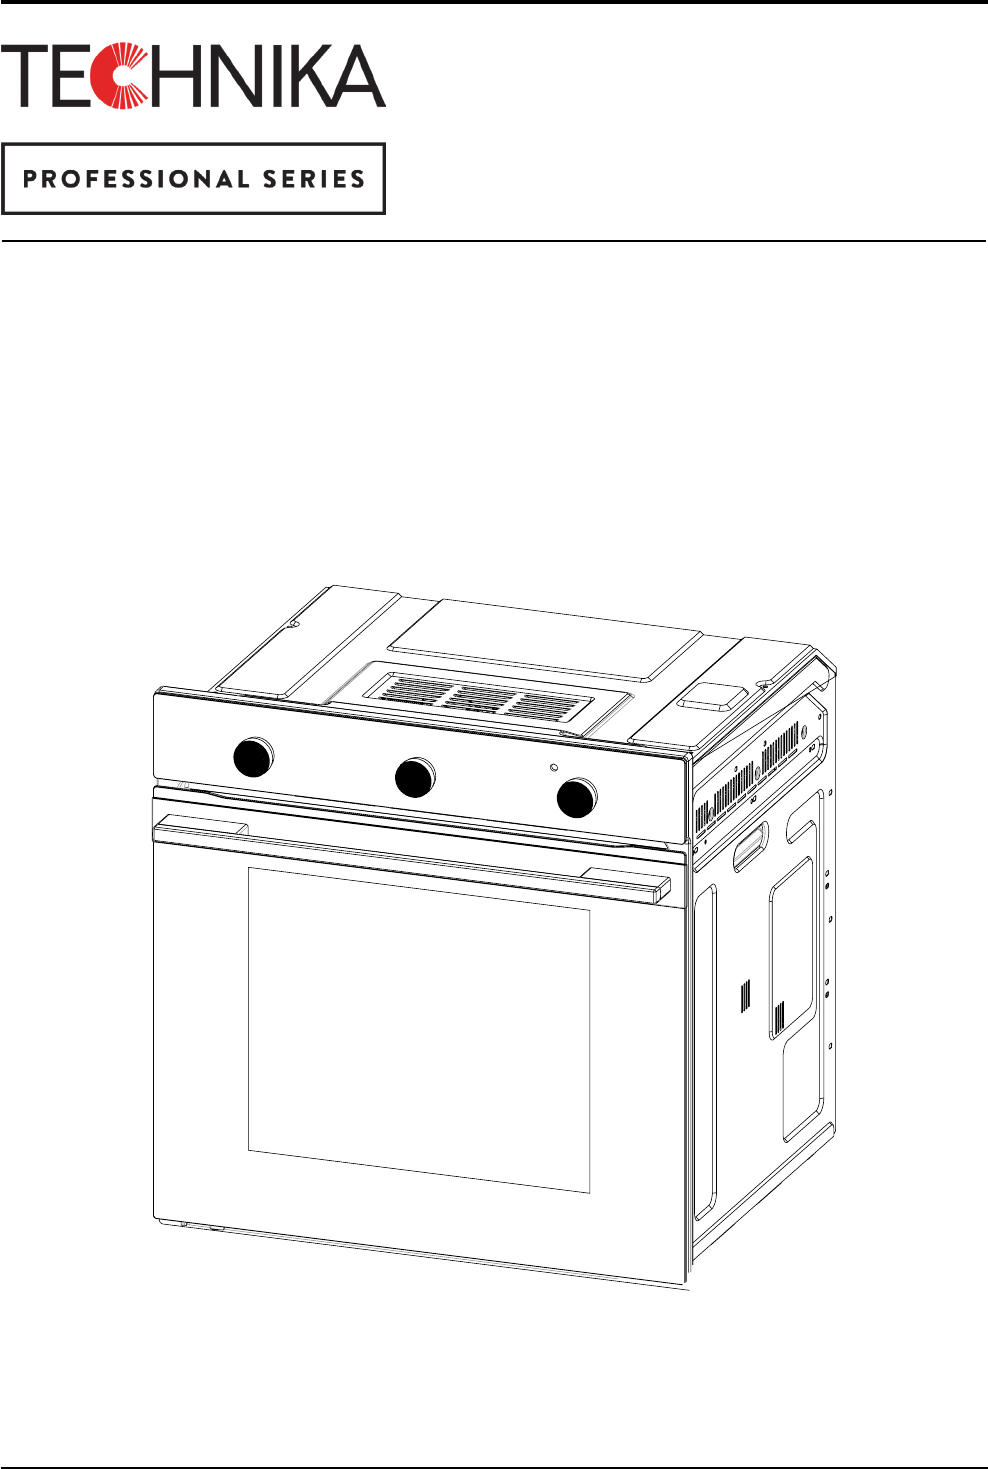 technika oven user manual